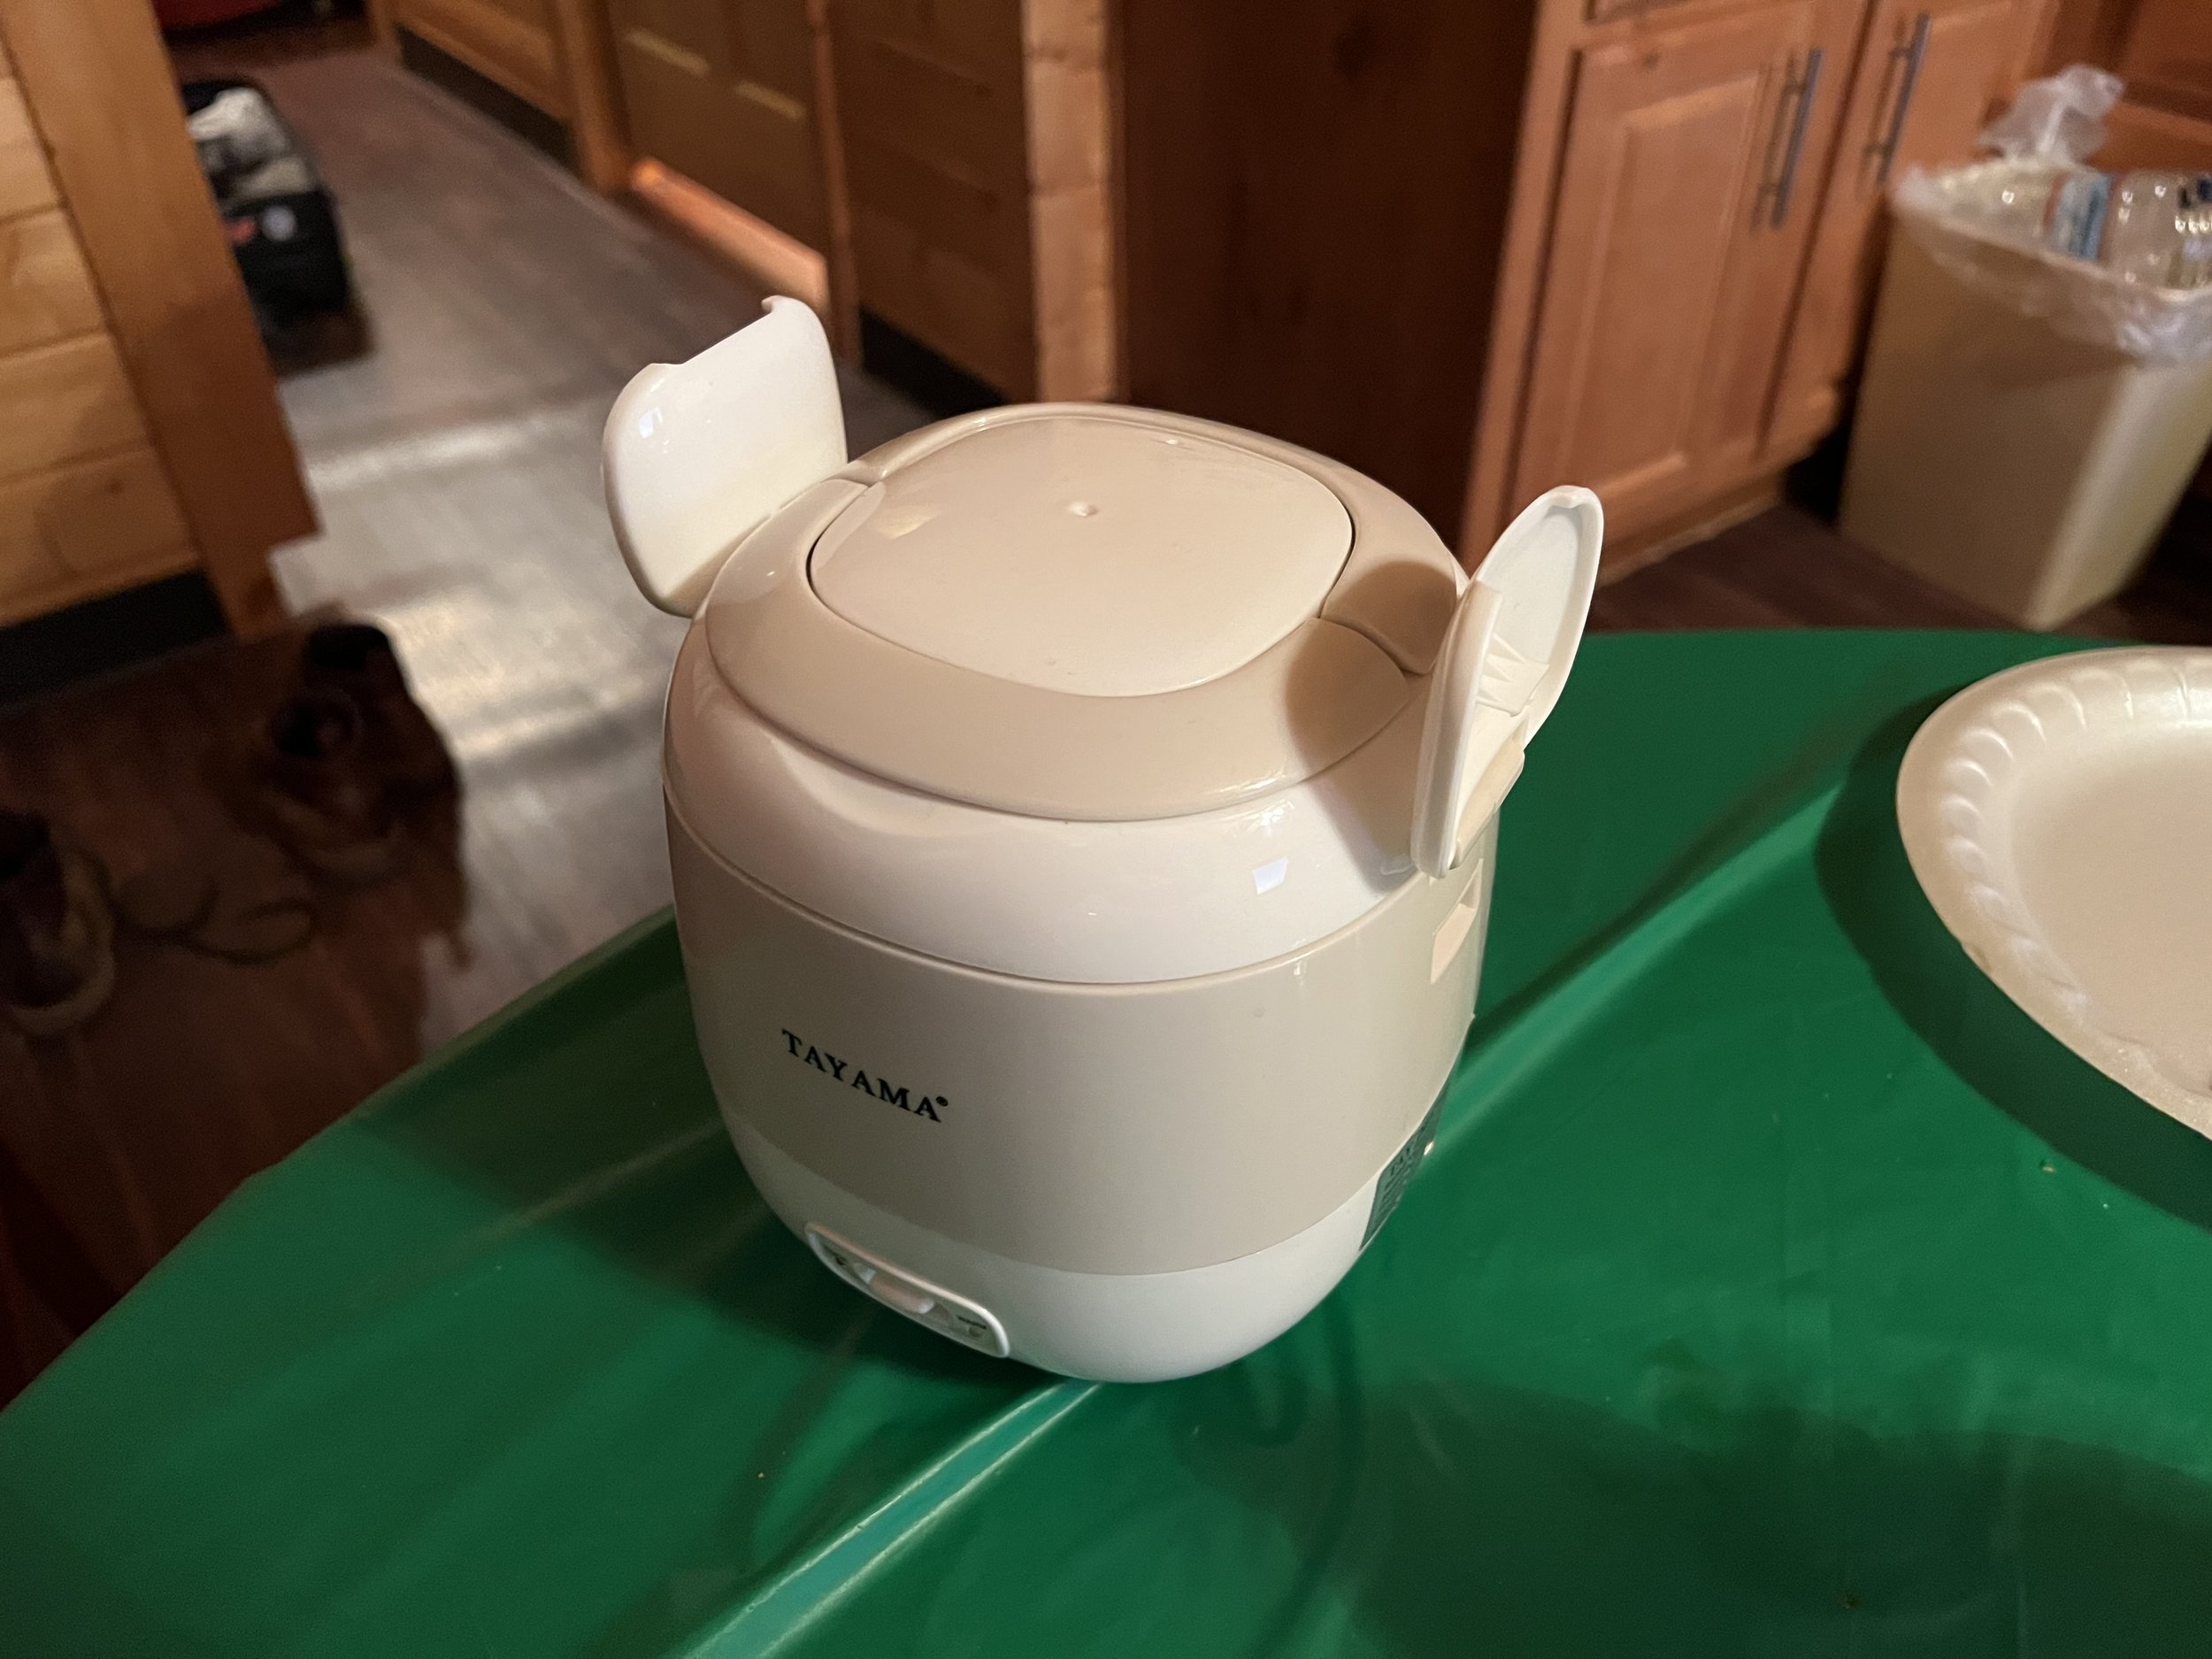 Tayama 1.5-Cup Portable Mini Rice Cooker